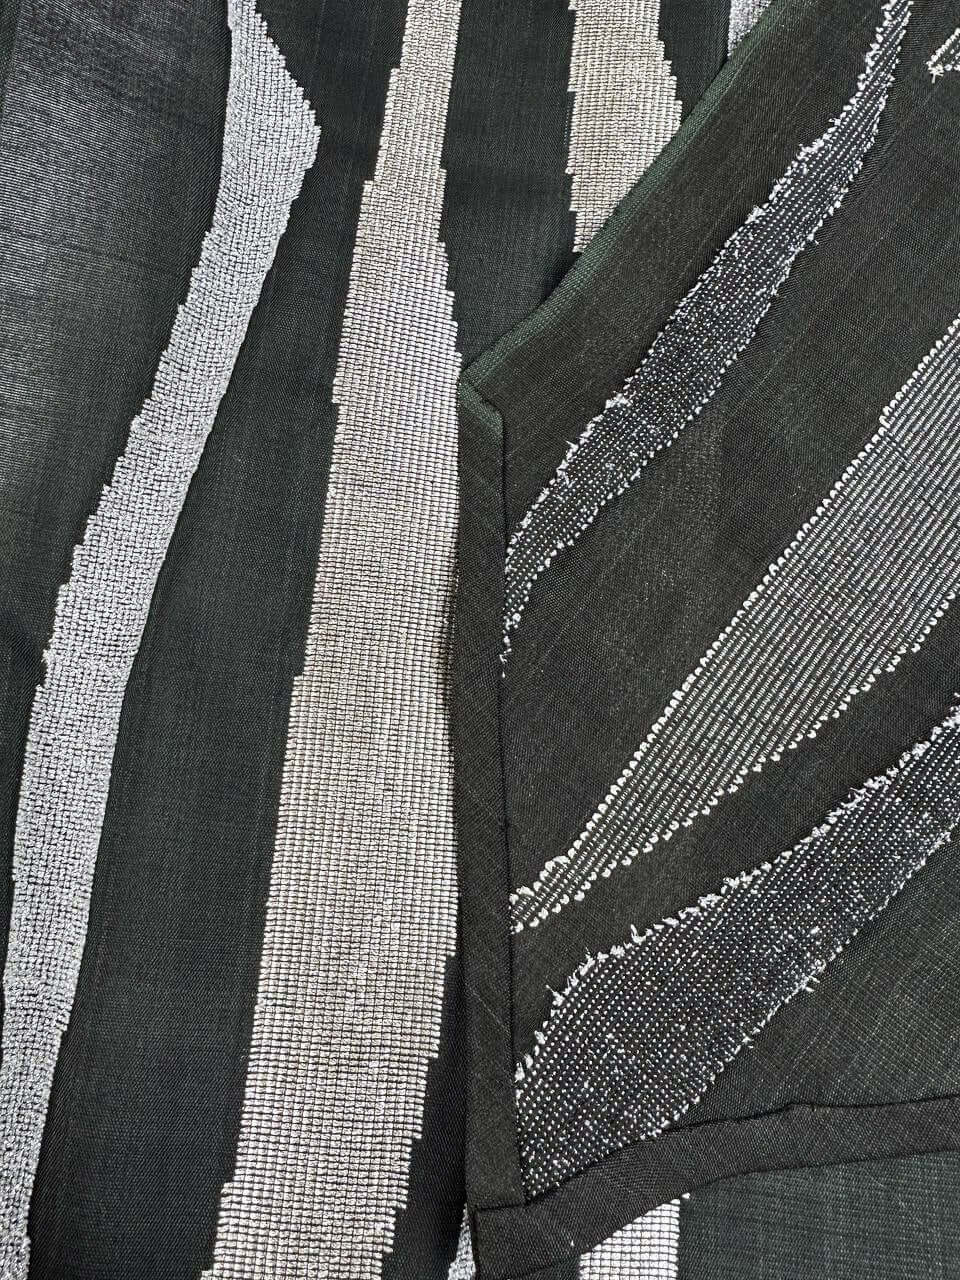 Selampai Perak handwoven silk songket shawl textile